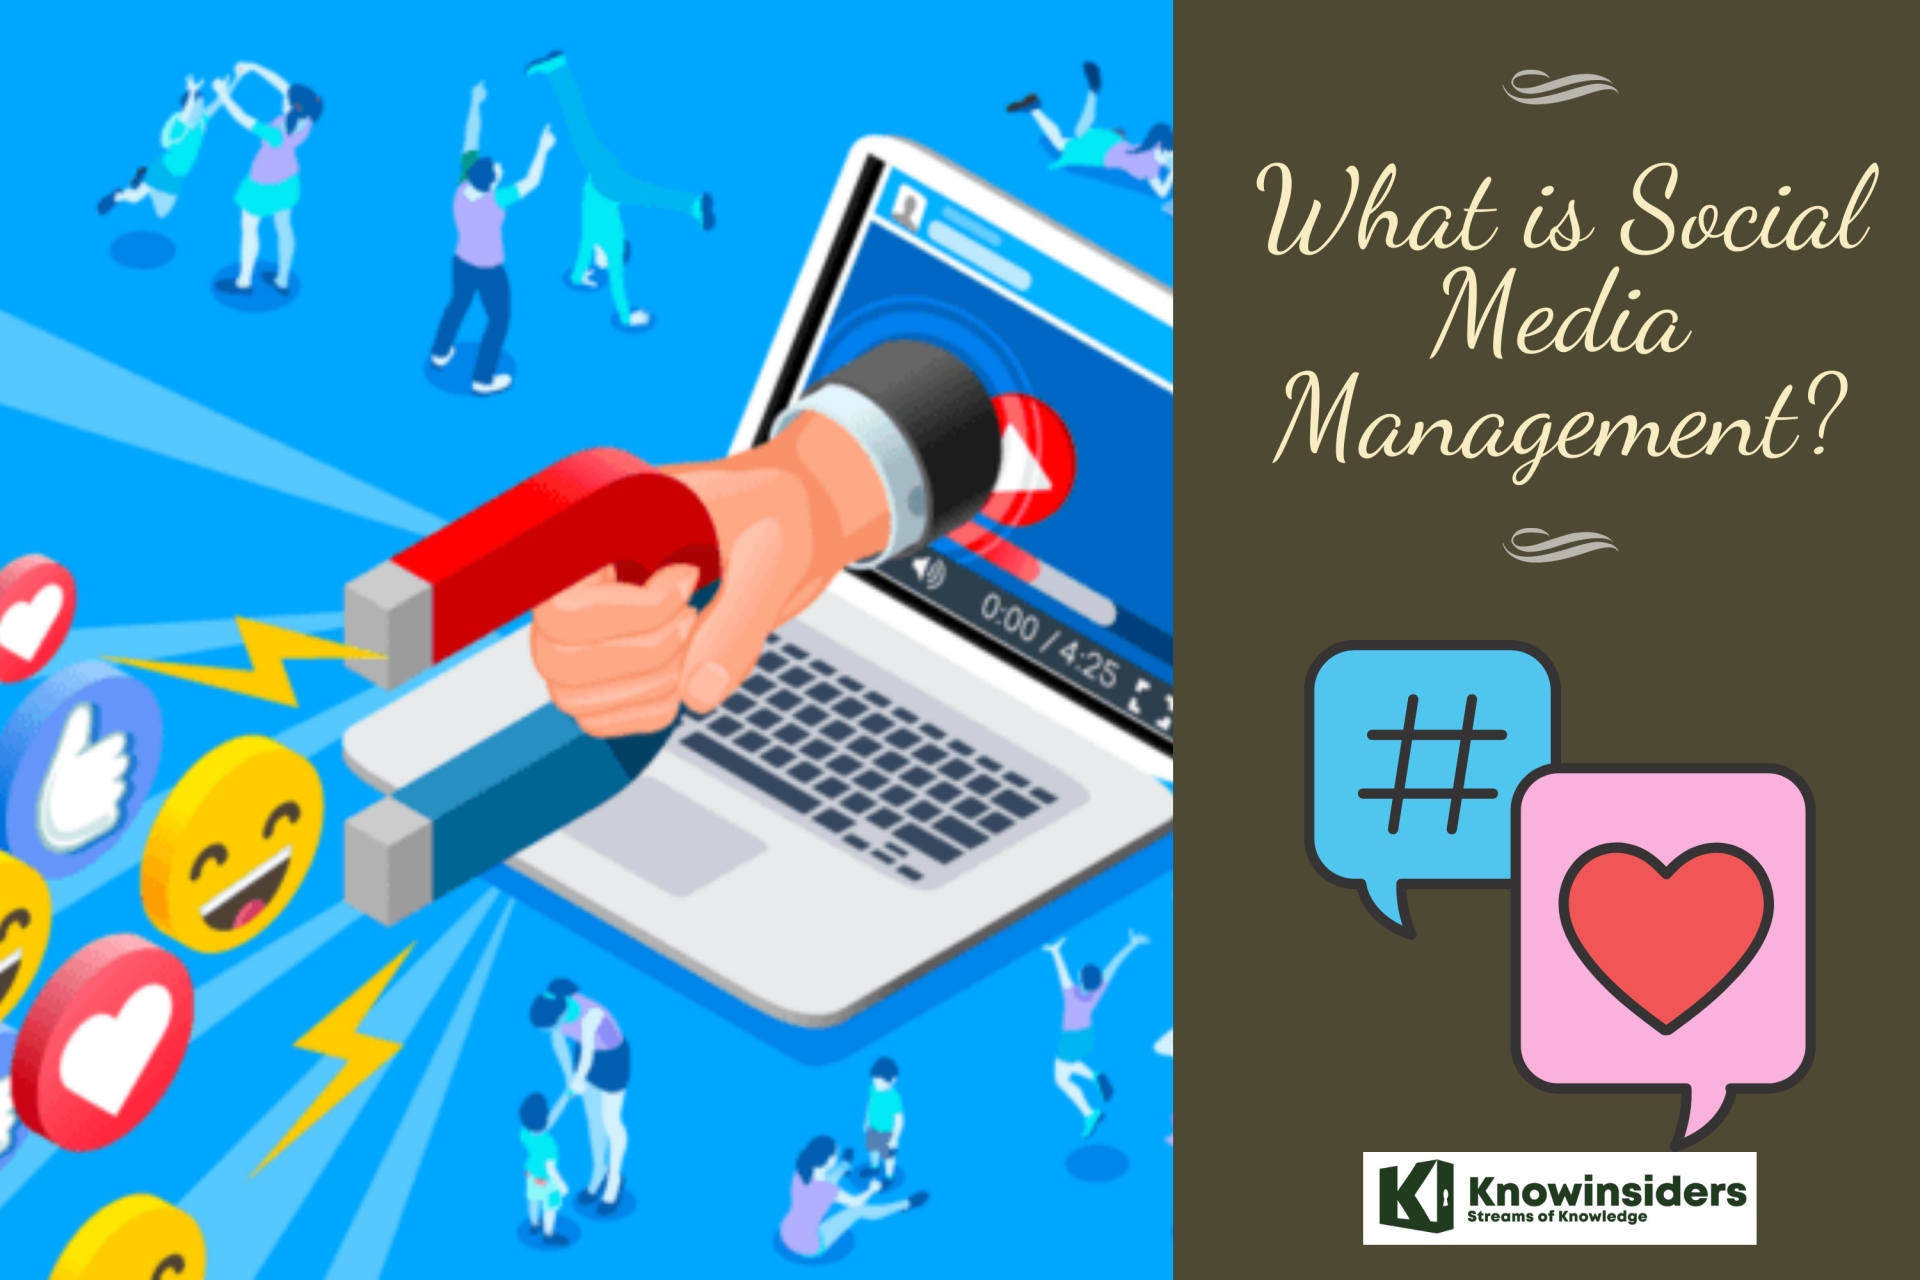 Social Media Management. Photo: KnowInsiders